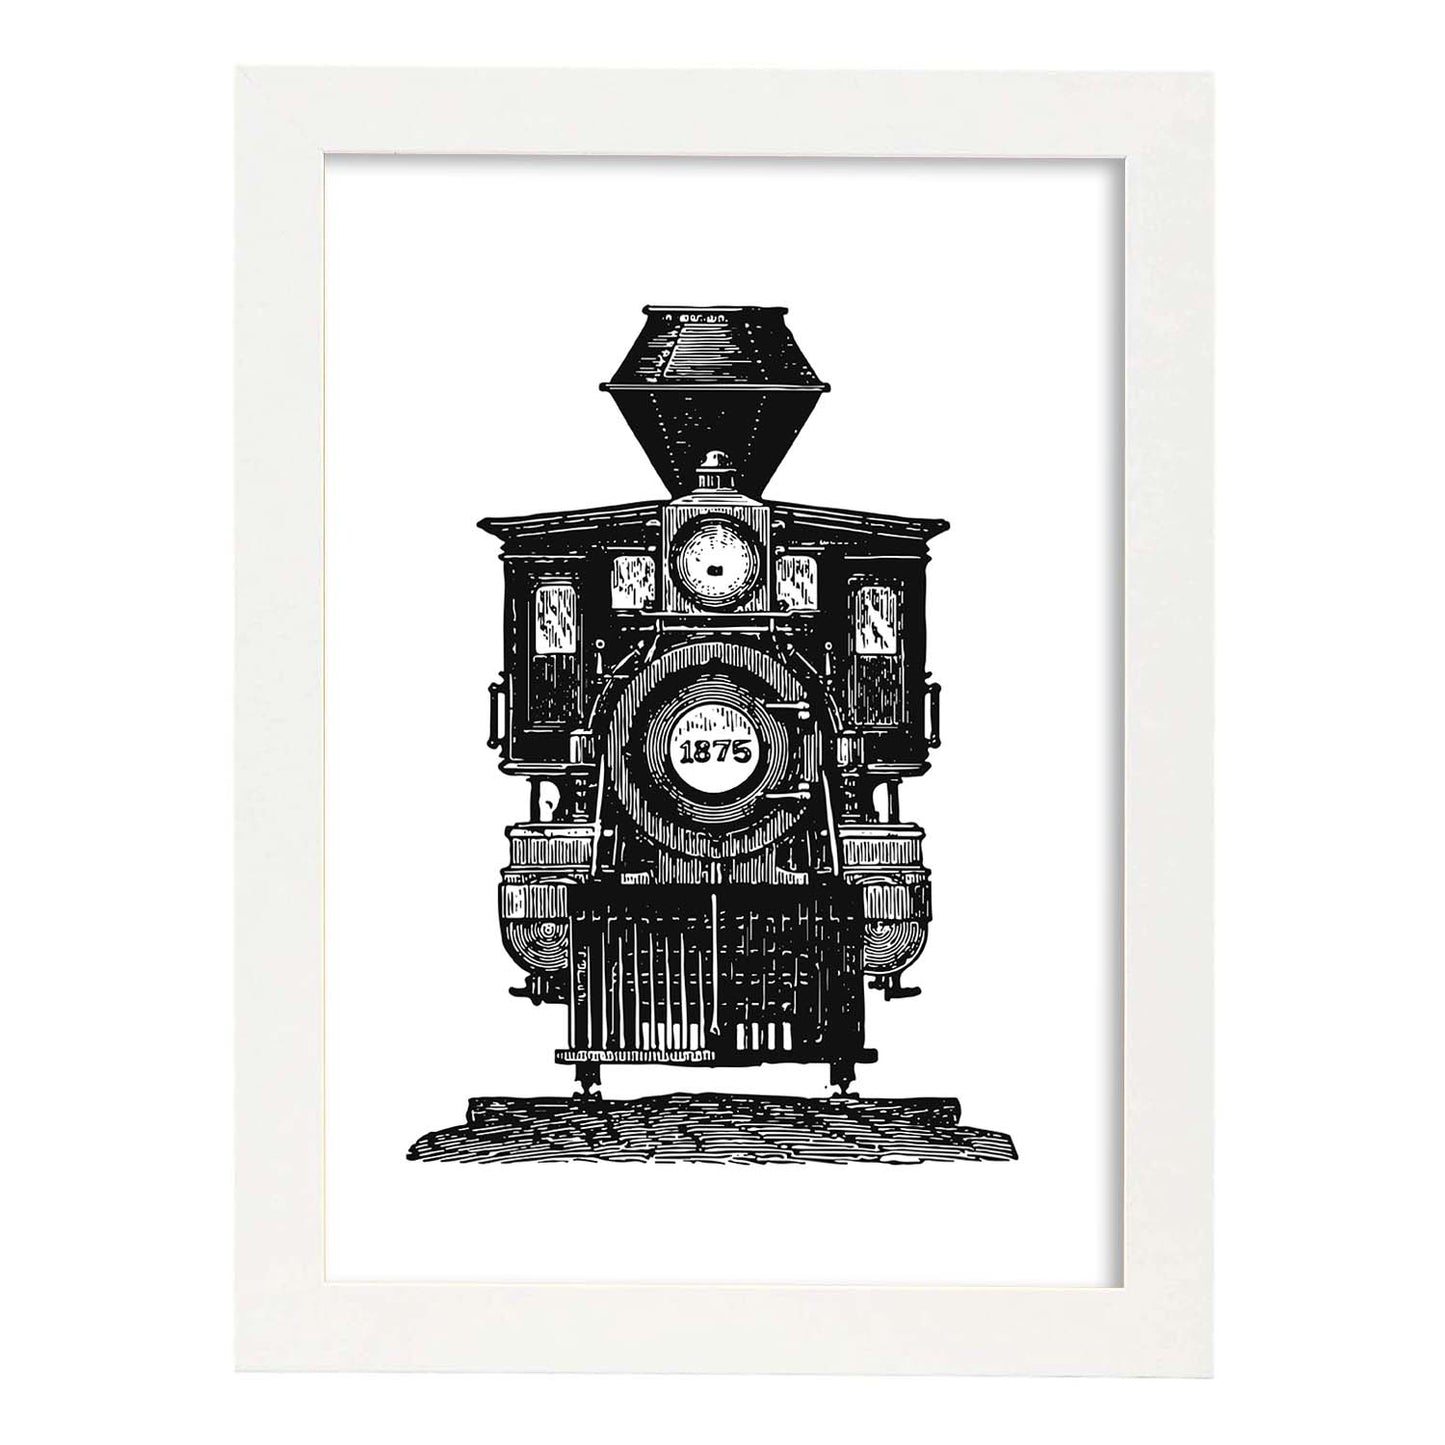 Lámina de Tren a vapor. Posters con objetos vintage.-Artwork-Nacnic-A4-Marco Blanco-Nacnic Estudio SL